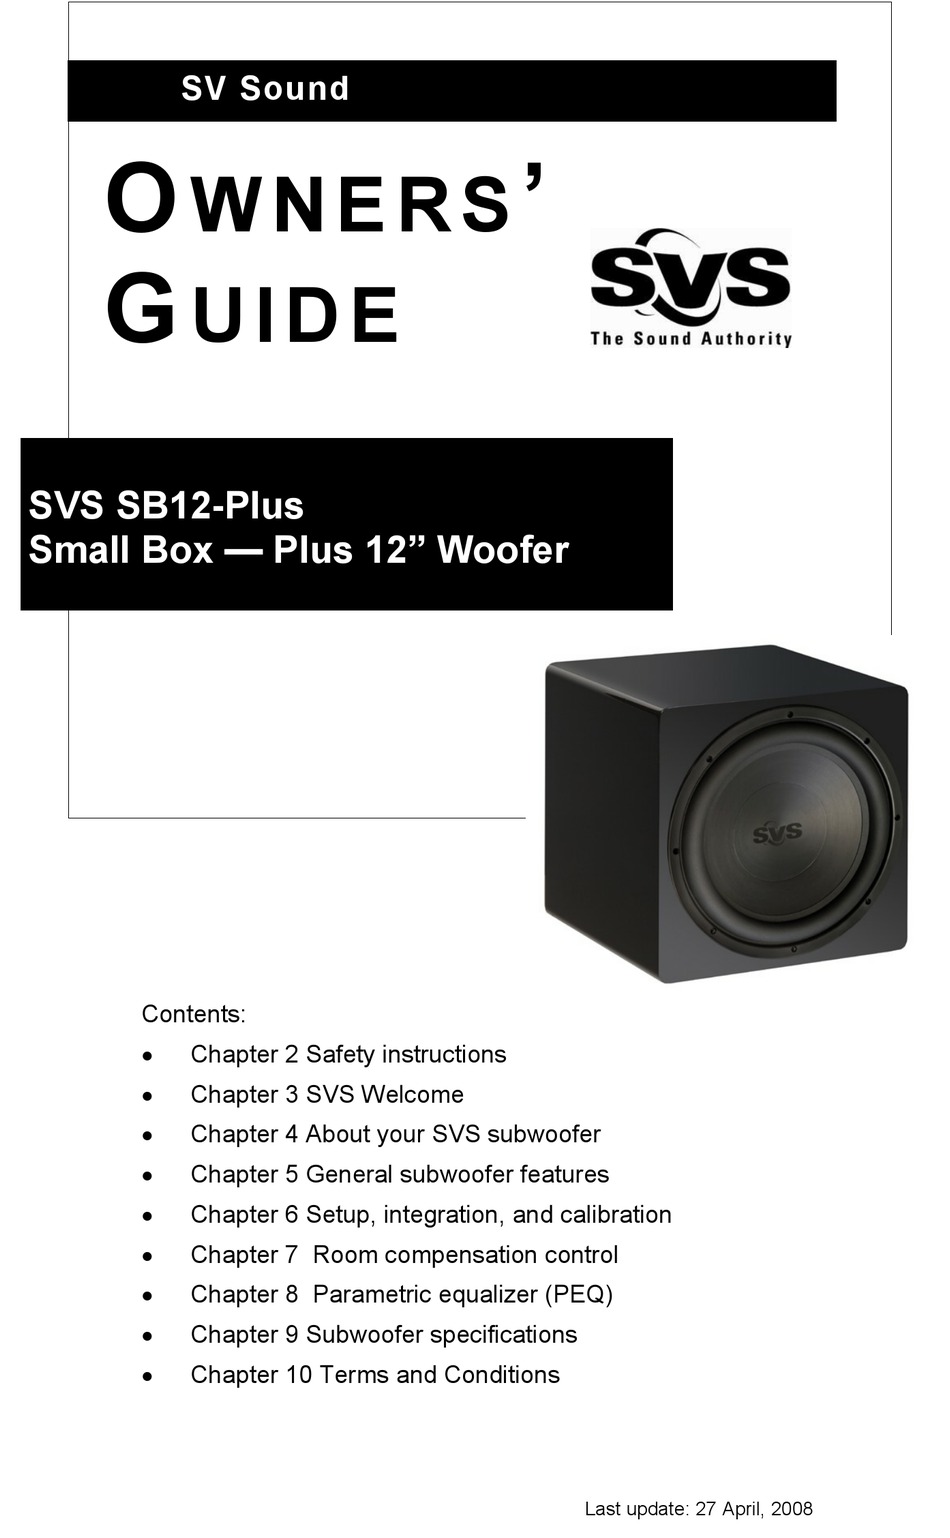 SV SB12-PLUS MANUAL Pdf Download | ManualsLib